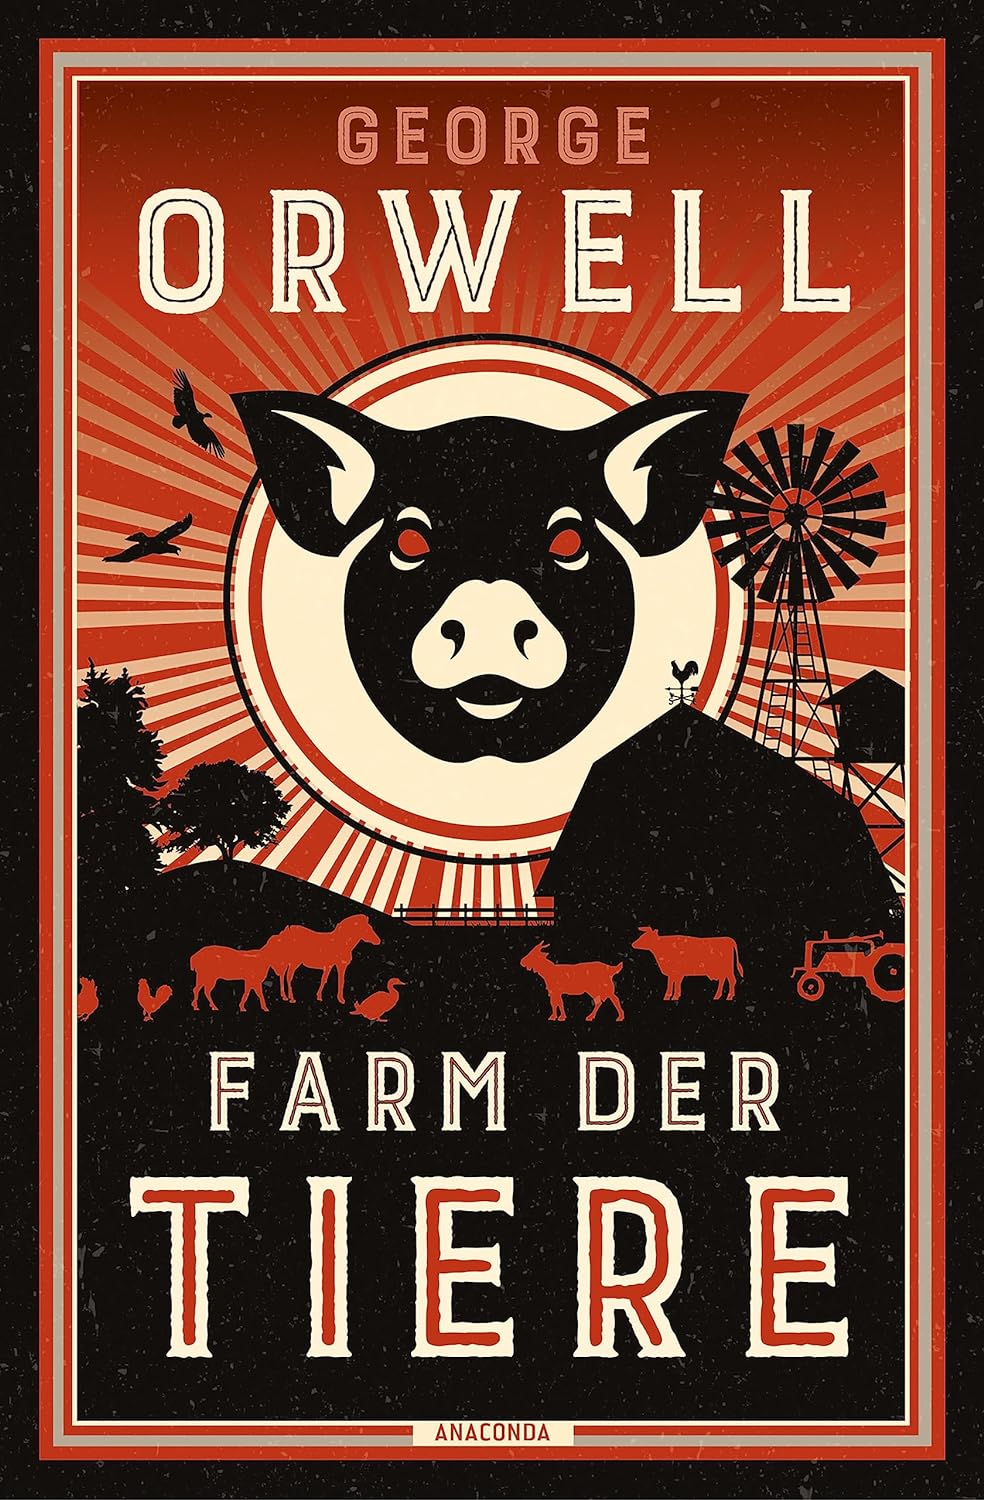 George Orwell: Farm der Tiere (Hardcover, German language, 2018, Anaconda Verlag)